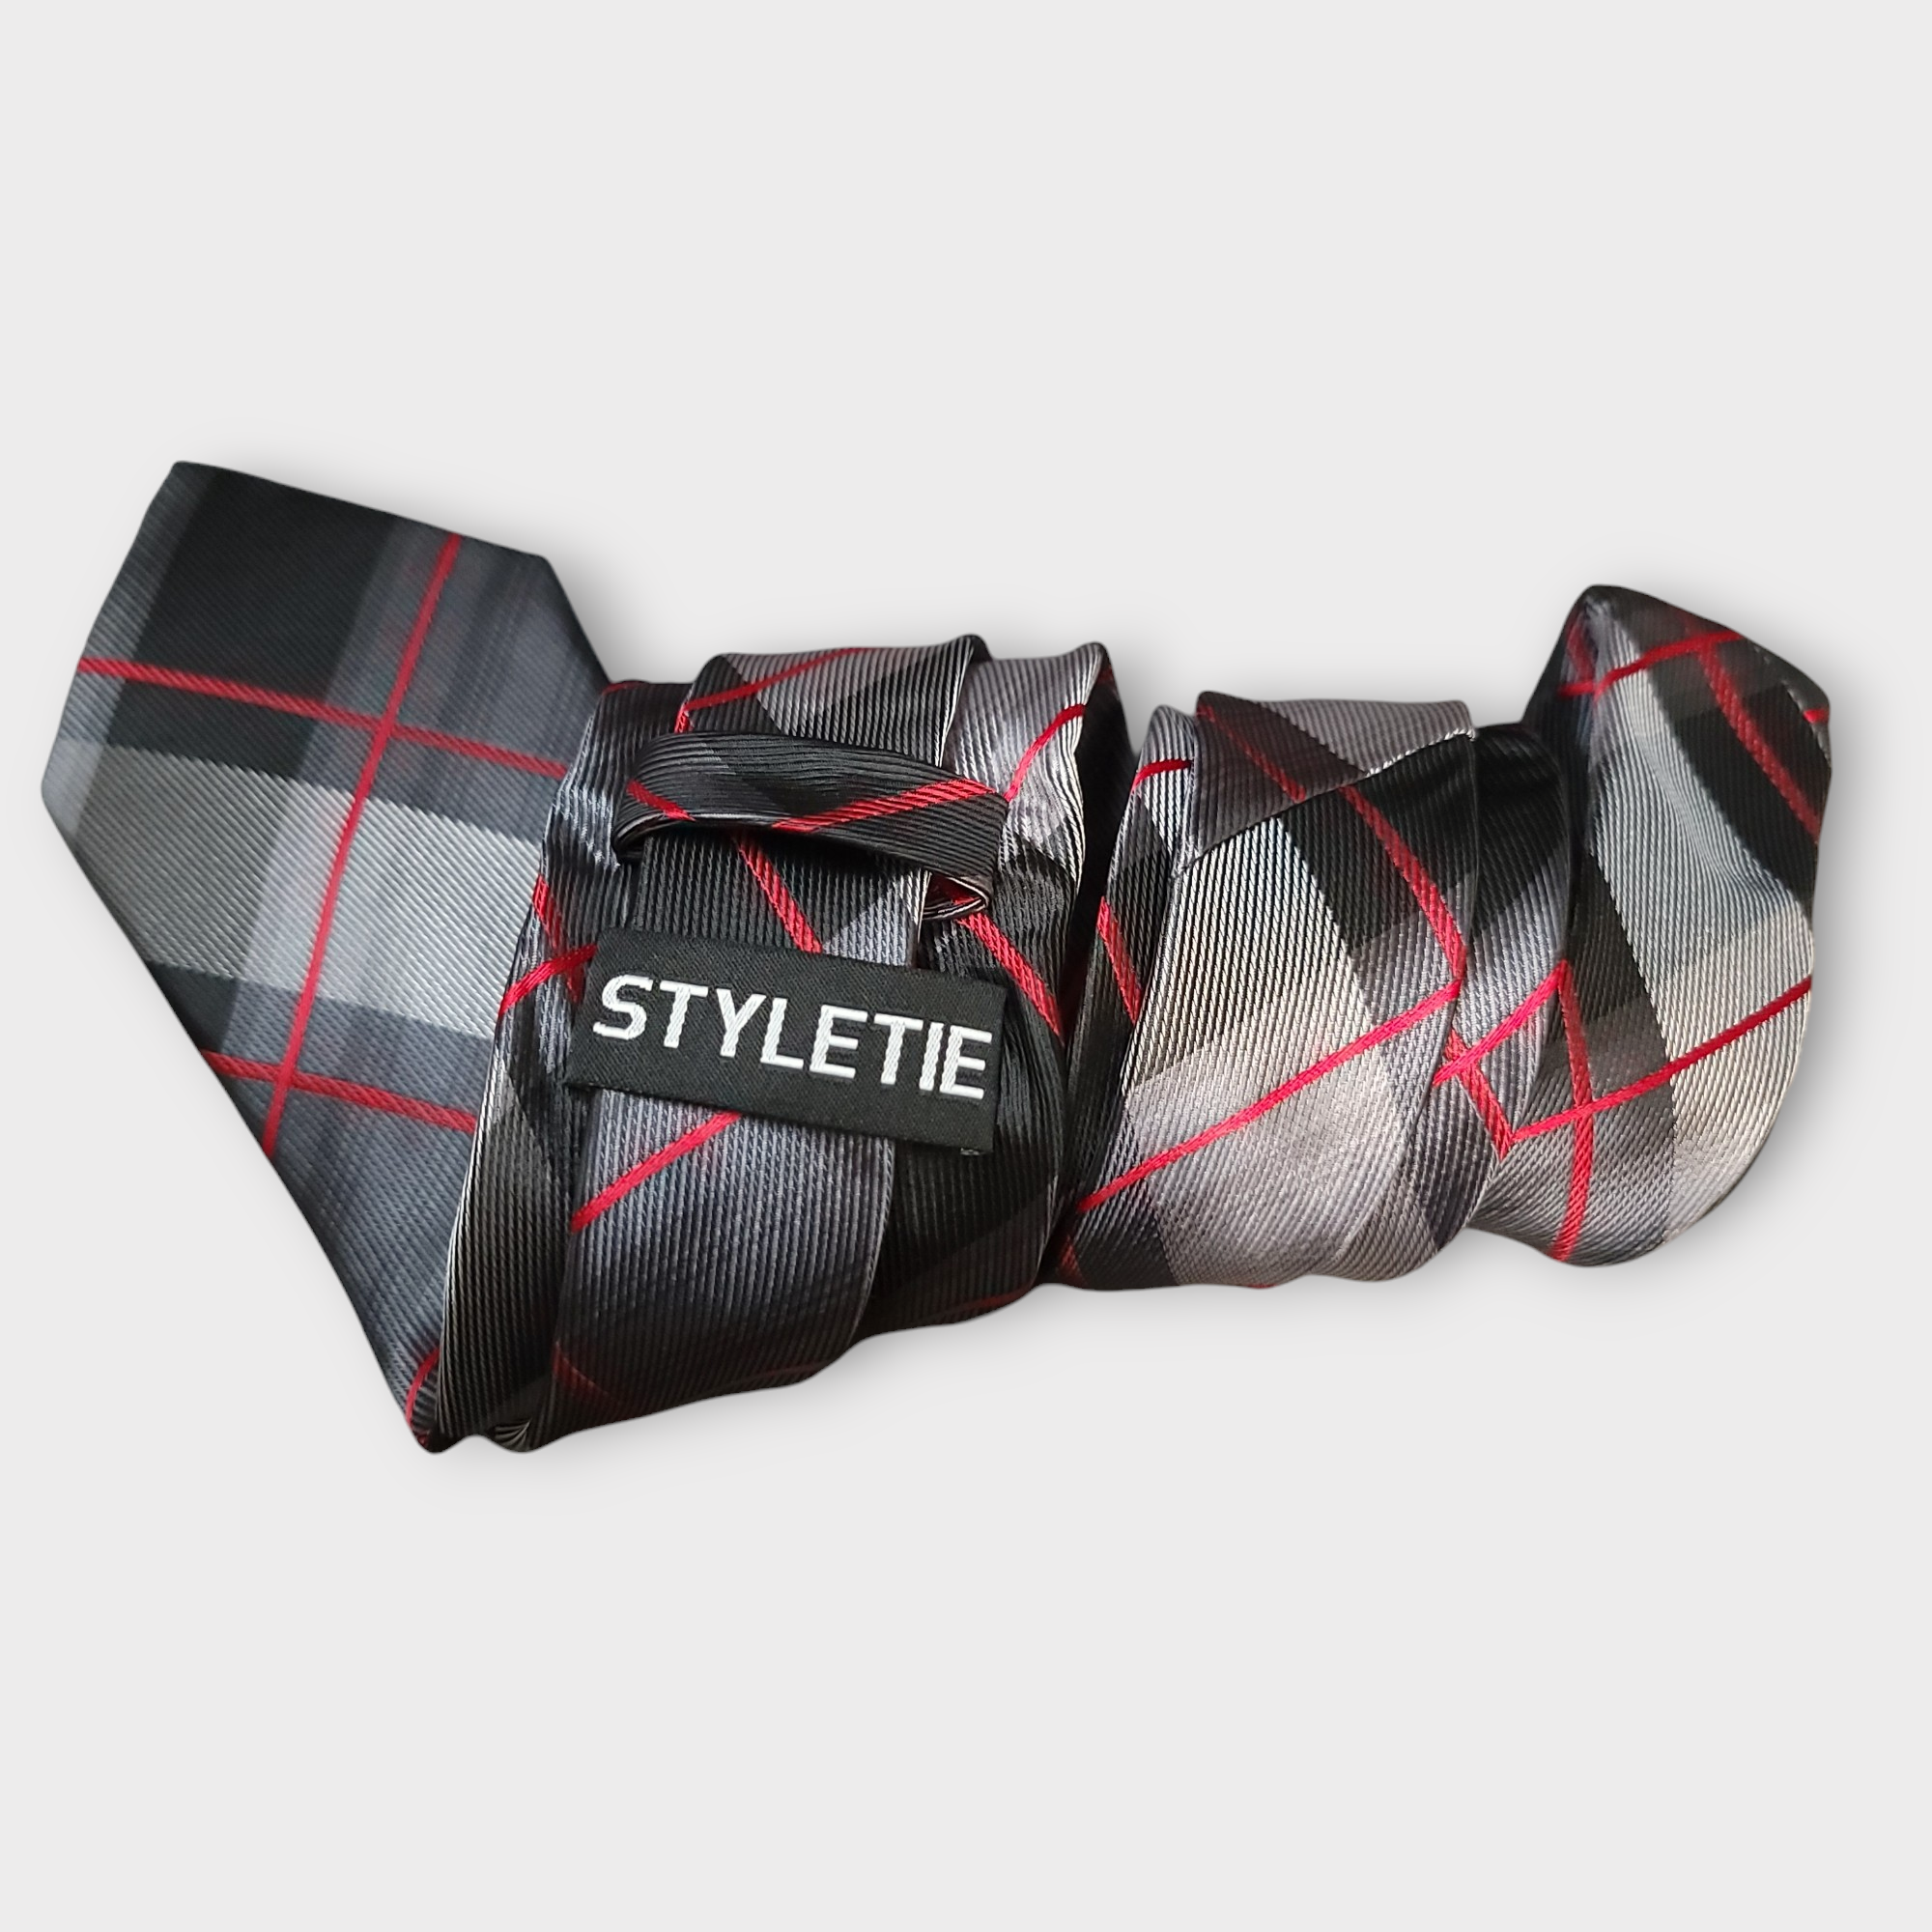 Extra Long Black Red Plaid Tie Pocket Square Cufflink Set